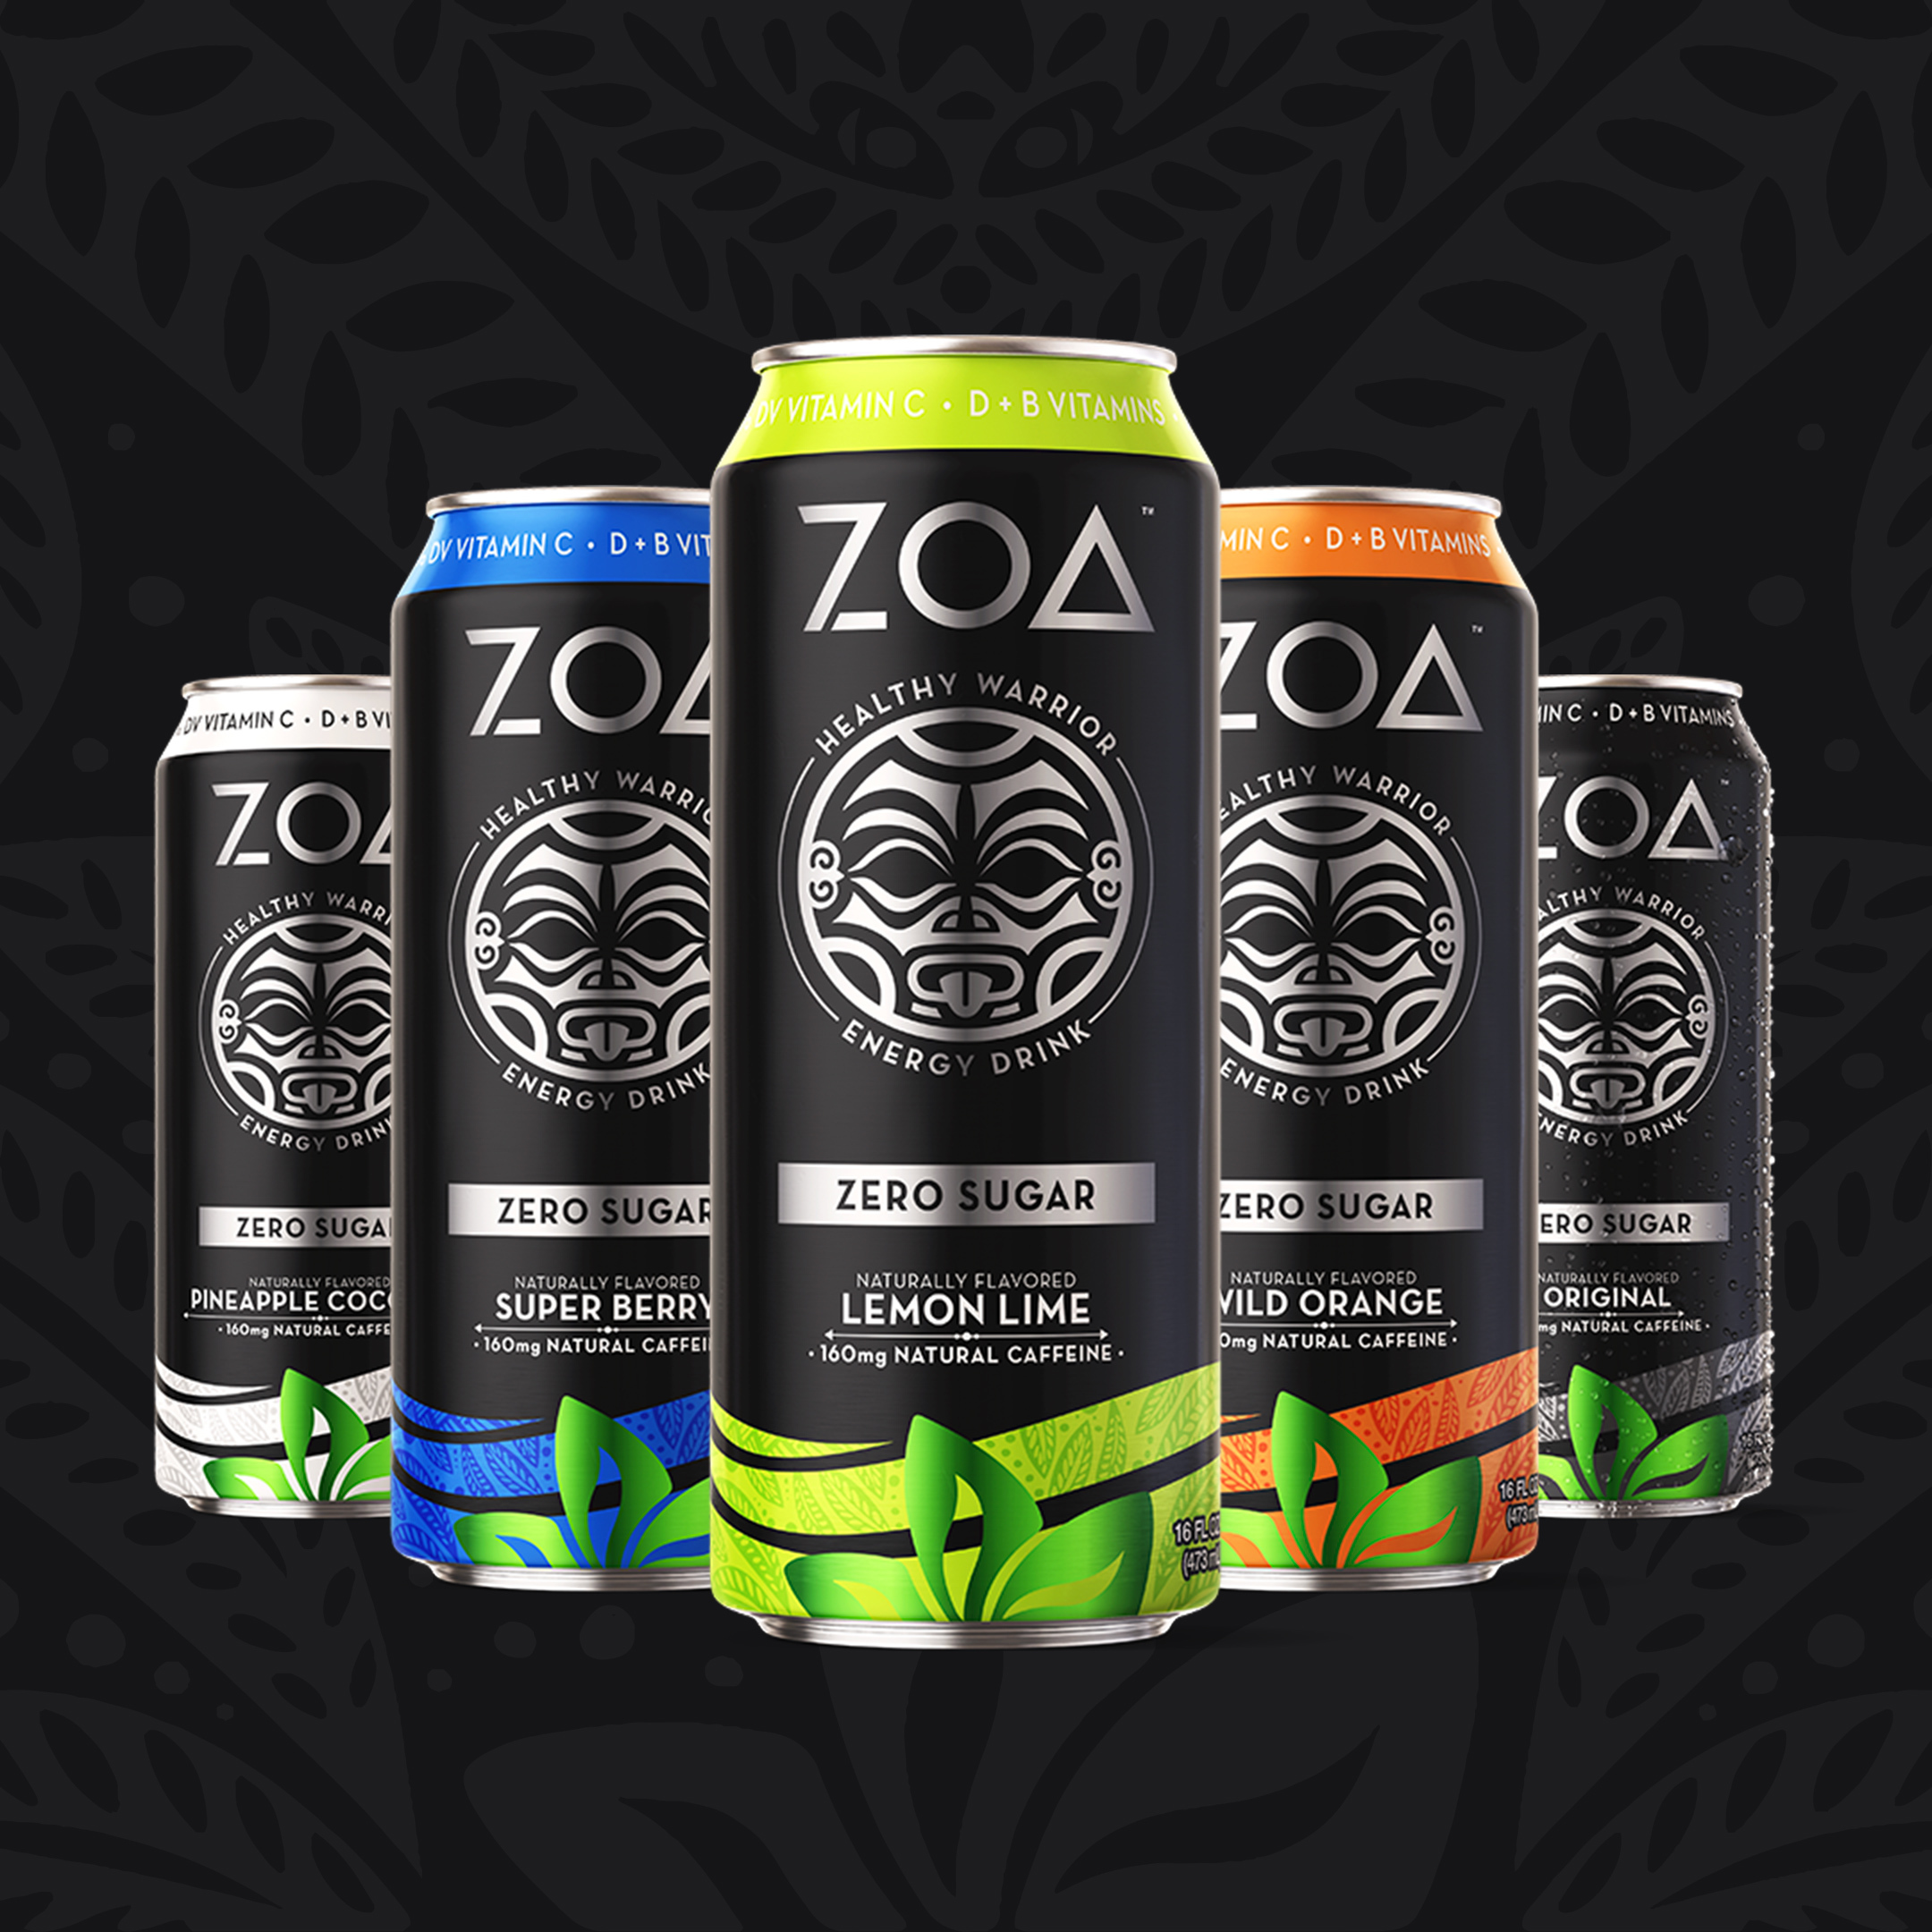 Available At GNC.com, ZOA Energy Drink Brings The Same Healthy, Positive Energy That Dwayne Johnson TrustsGNC ReviewZOA Energy At GNC.com